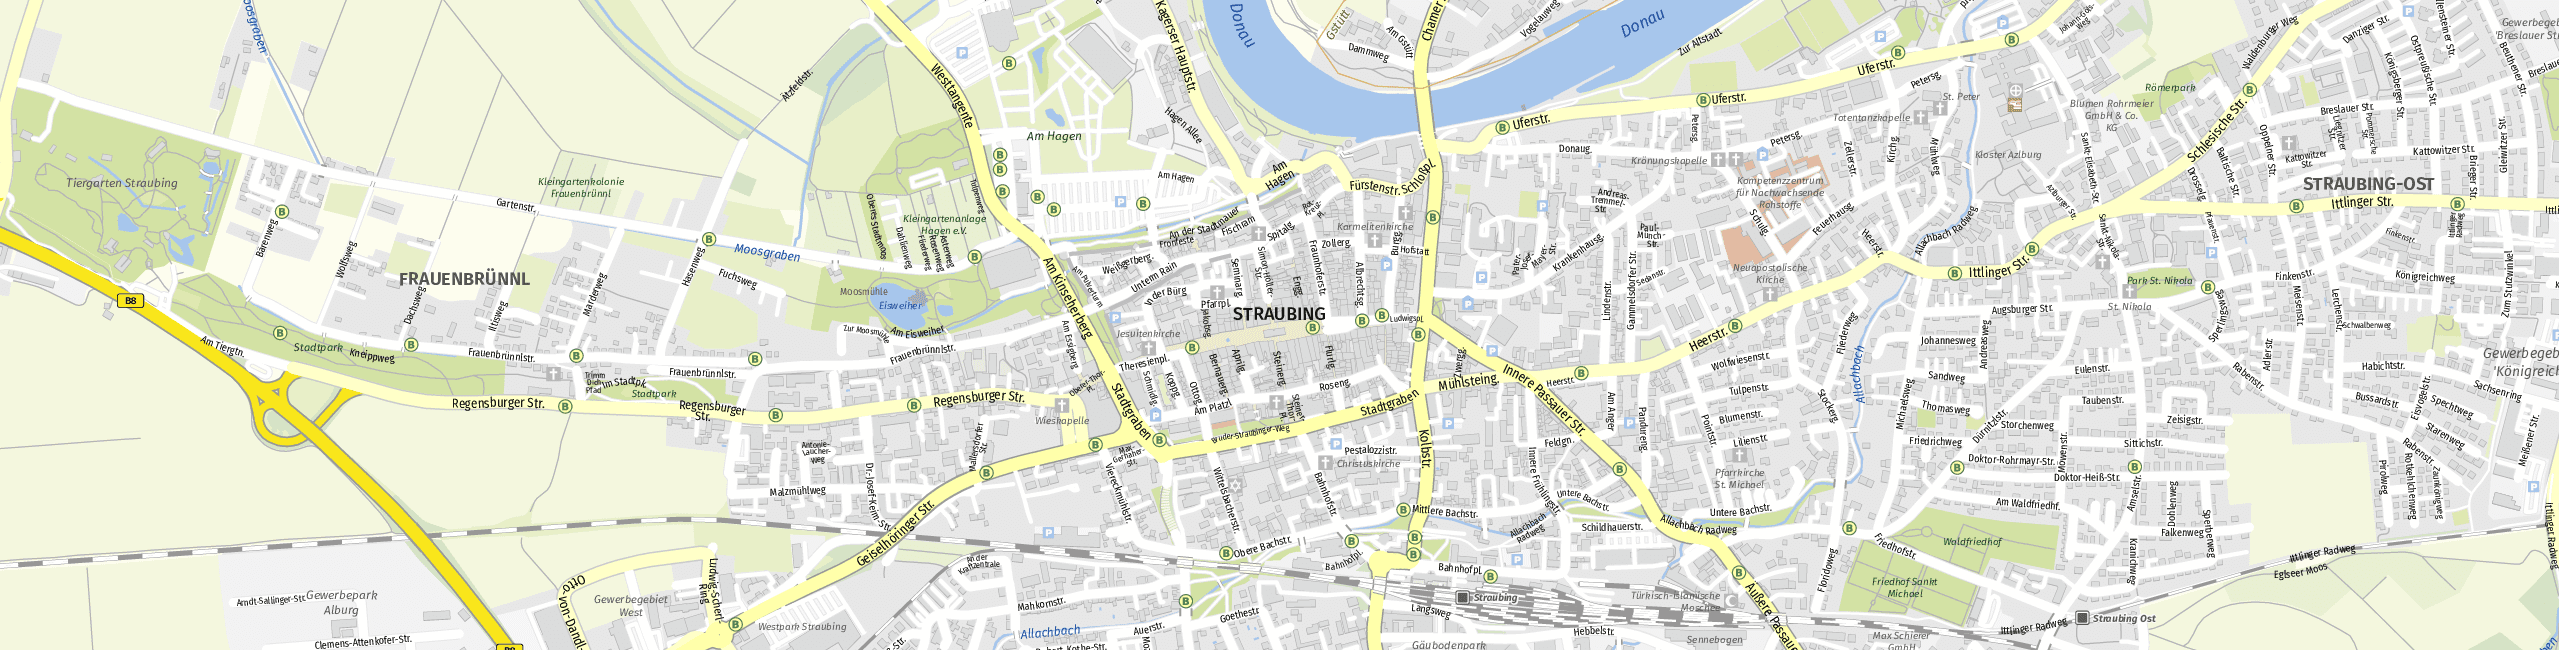 Stadtplan Straubing zum Downloaden.